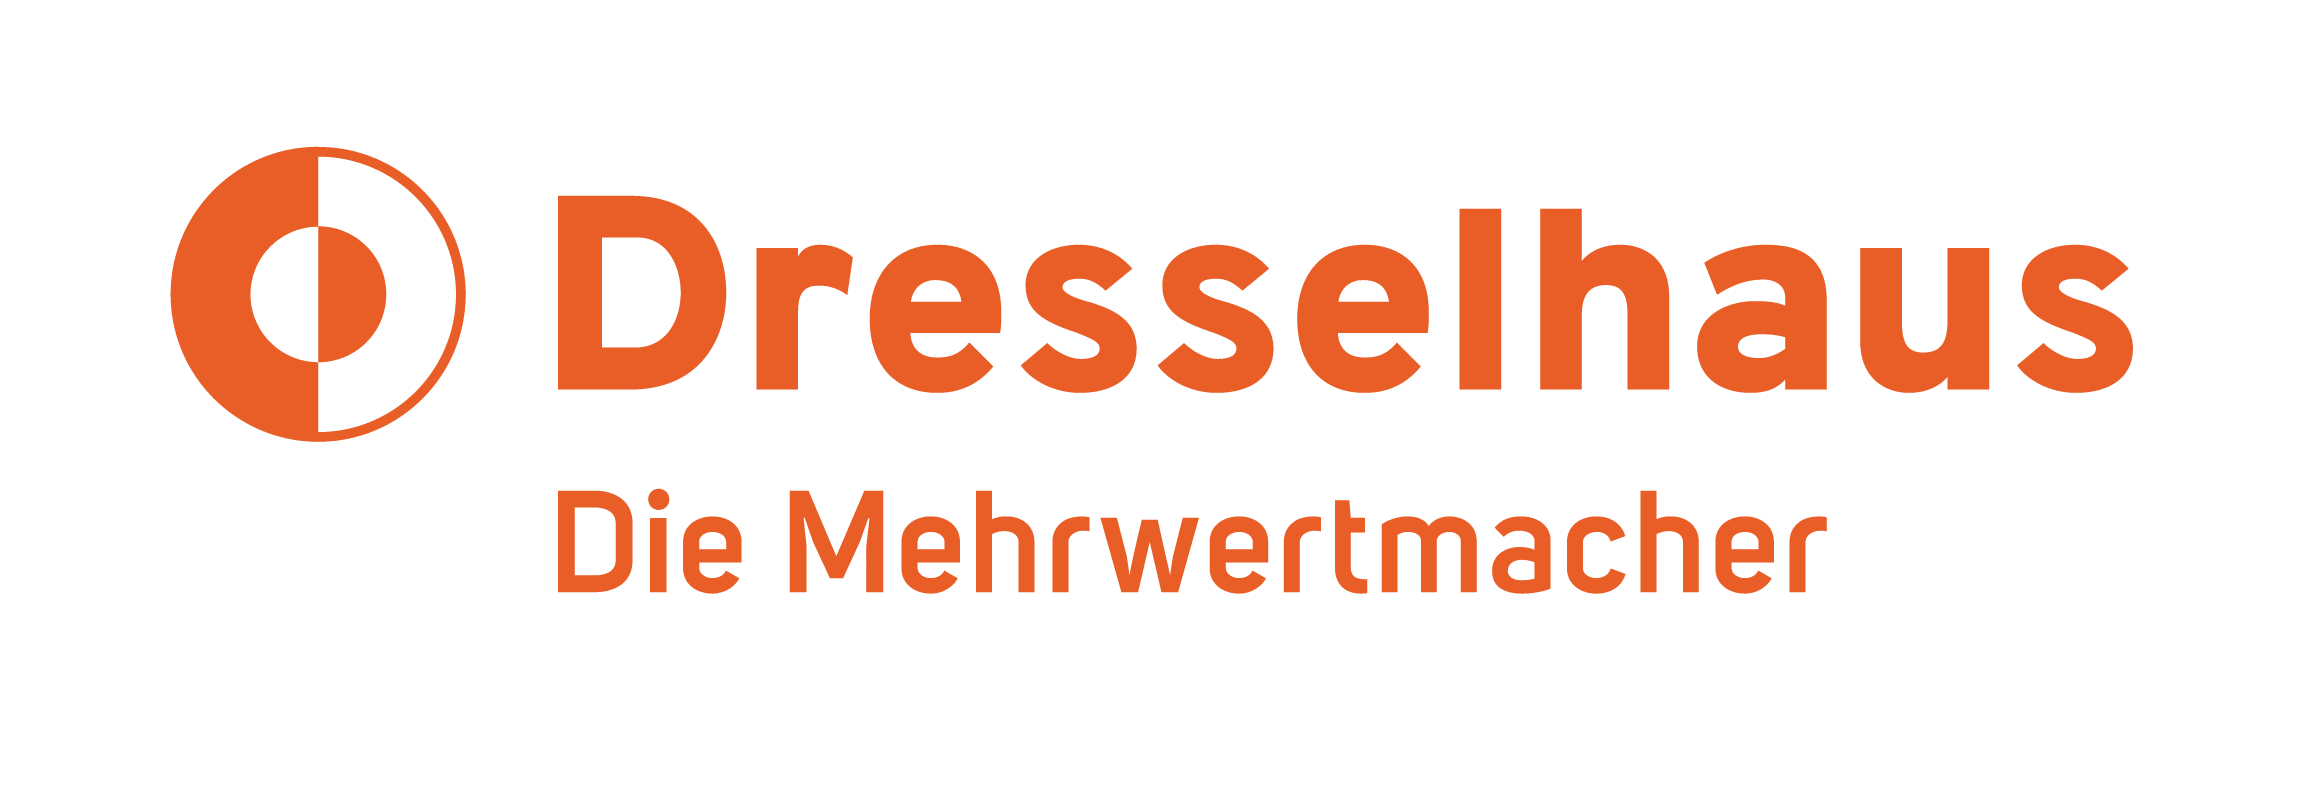 https://werkmarkt.de/wp-content/uploads/2021/02/Dresselhaus_Logo_Claim_horizontal_RGB.png